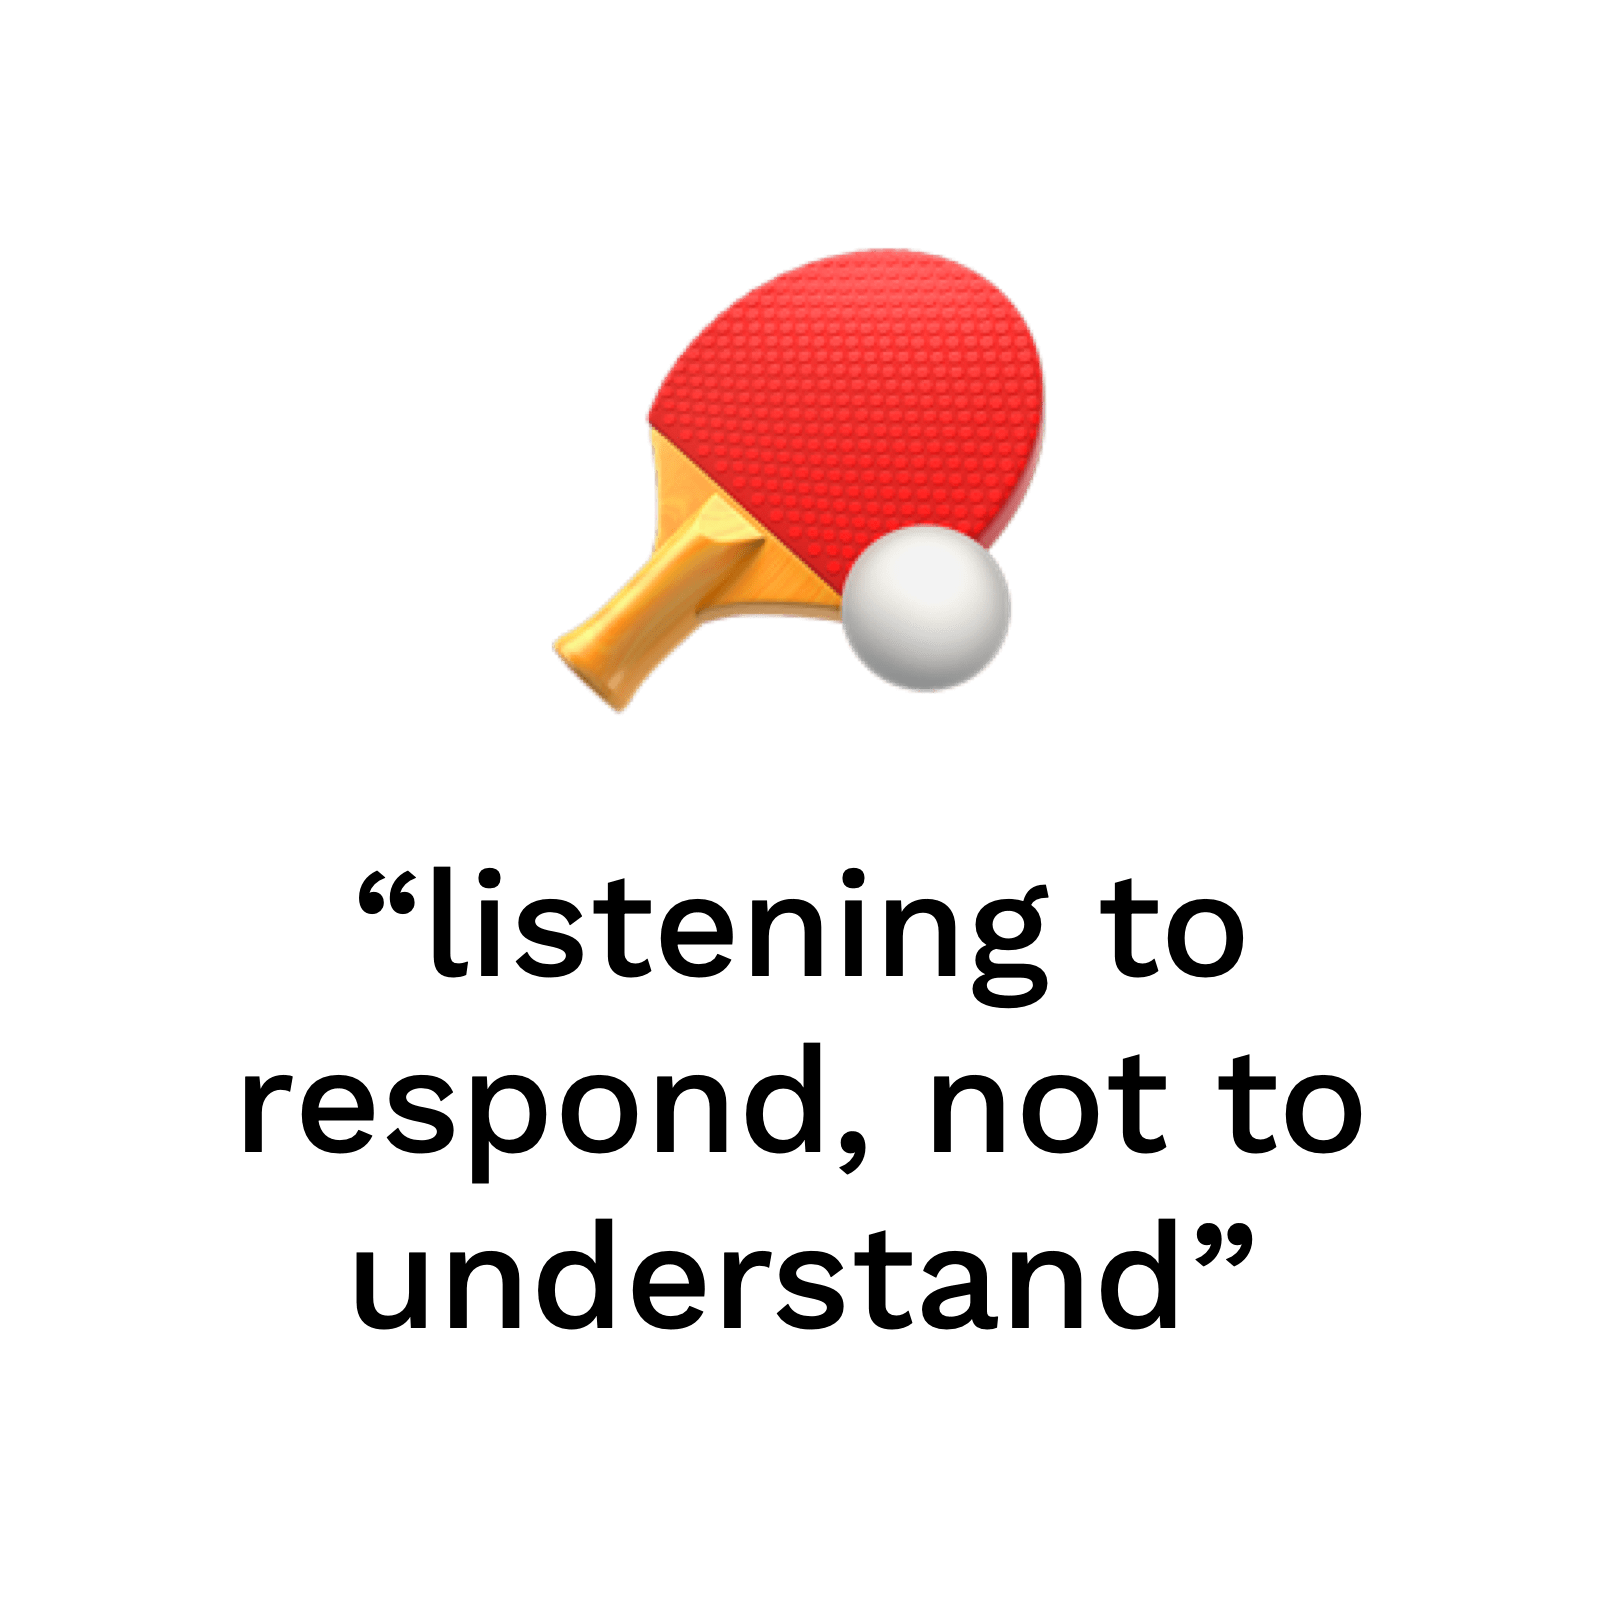 "listening to respond, not to understand"